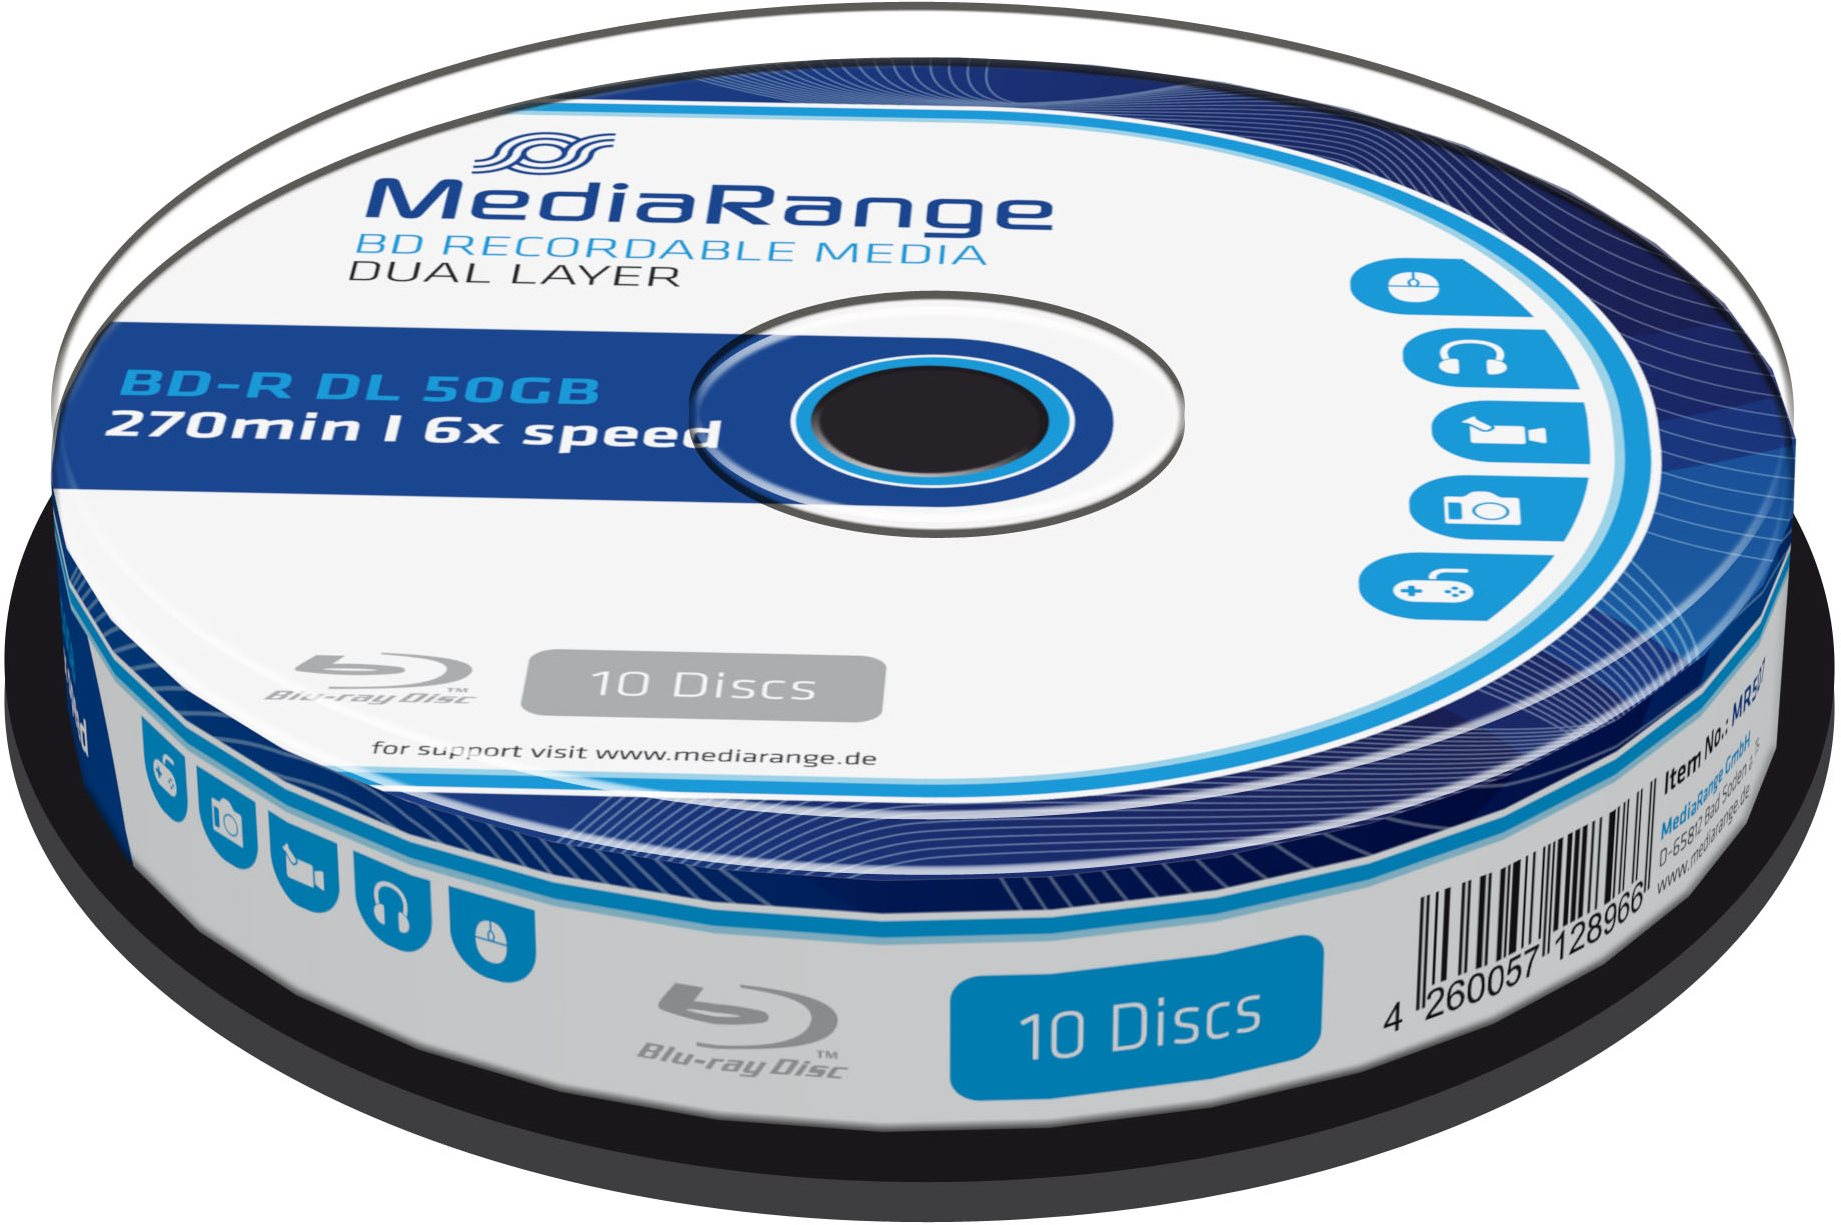 Média MediaRange BD-R (HTL) 50GB Dual Layer 10db cakebox